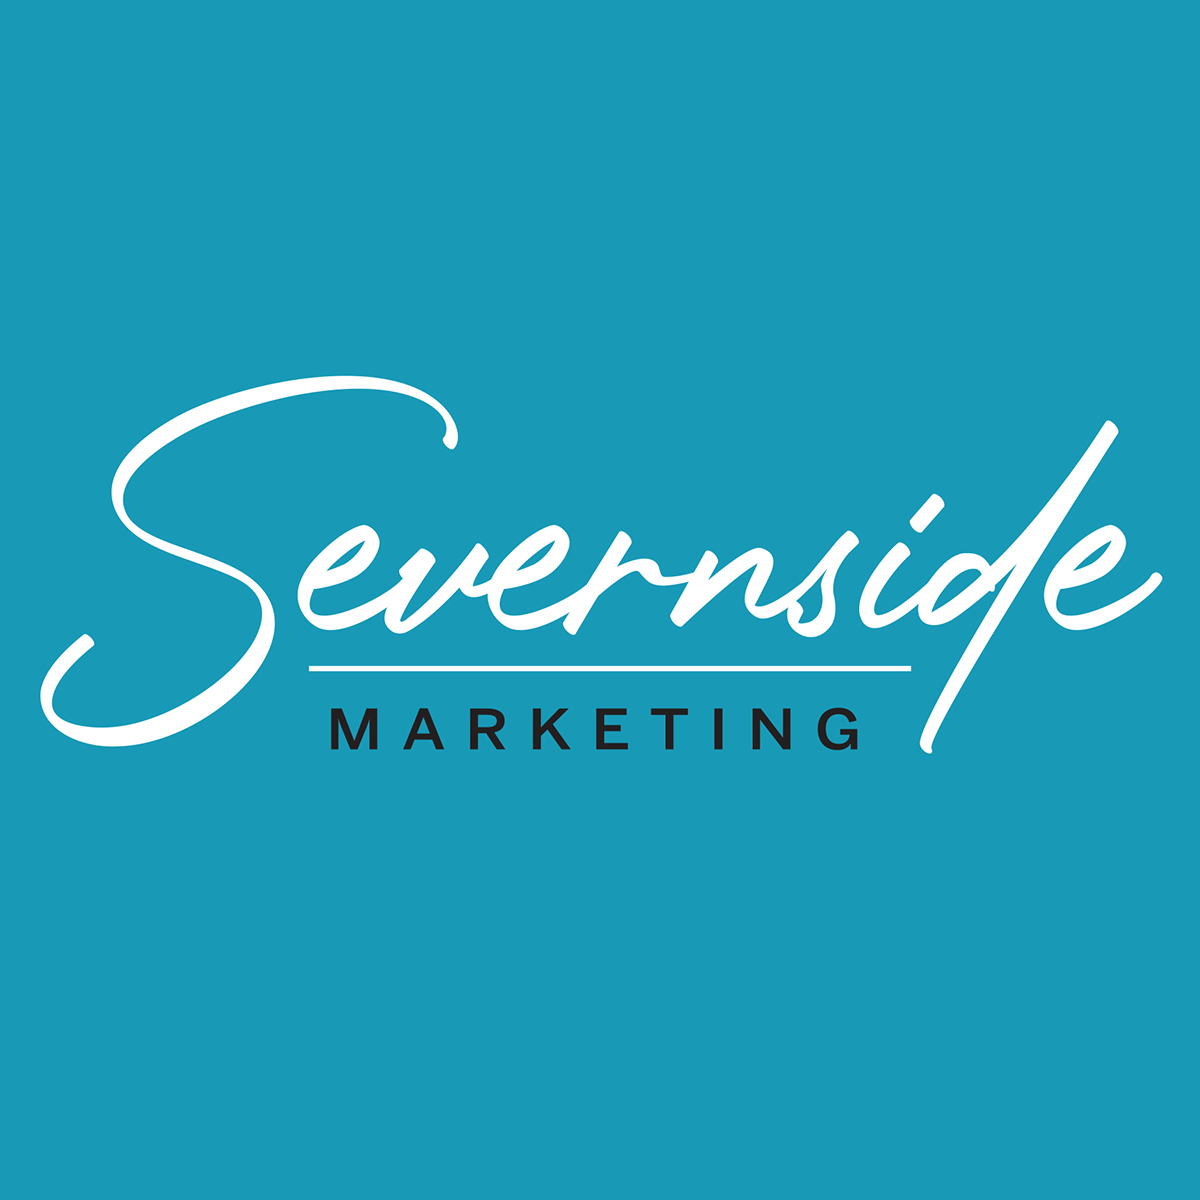 Severnside Marketing, LLC